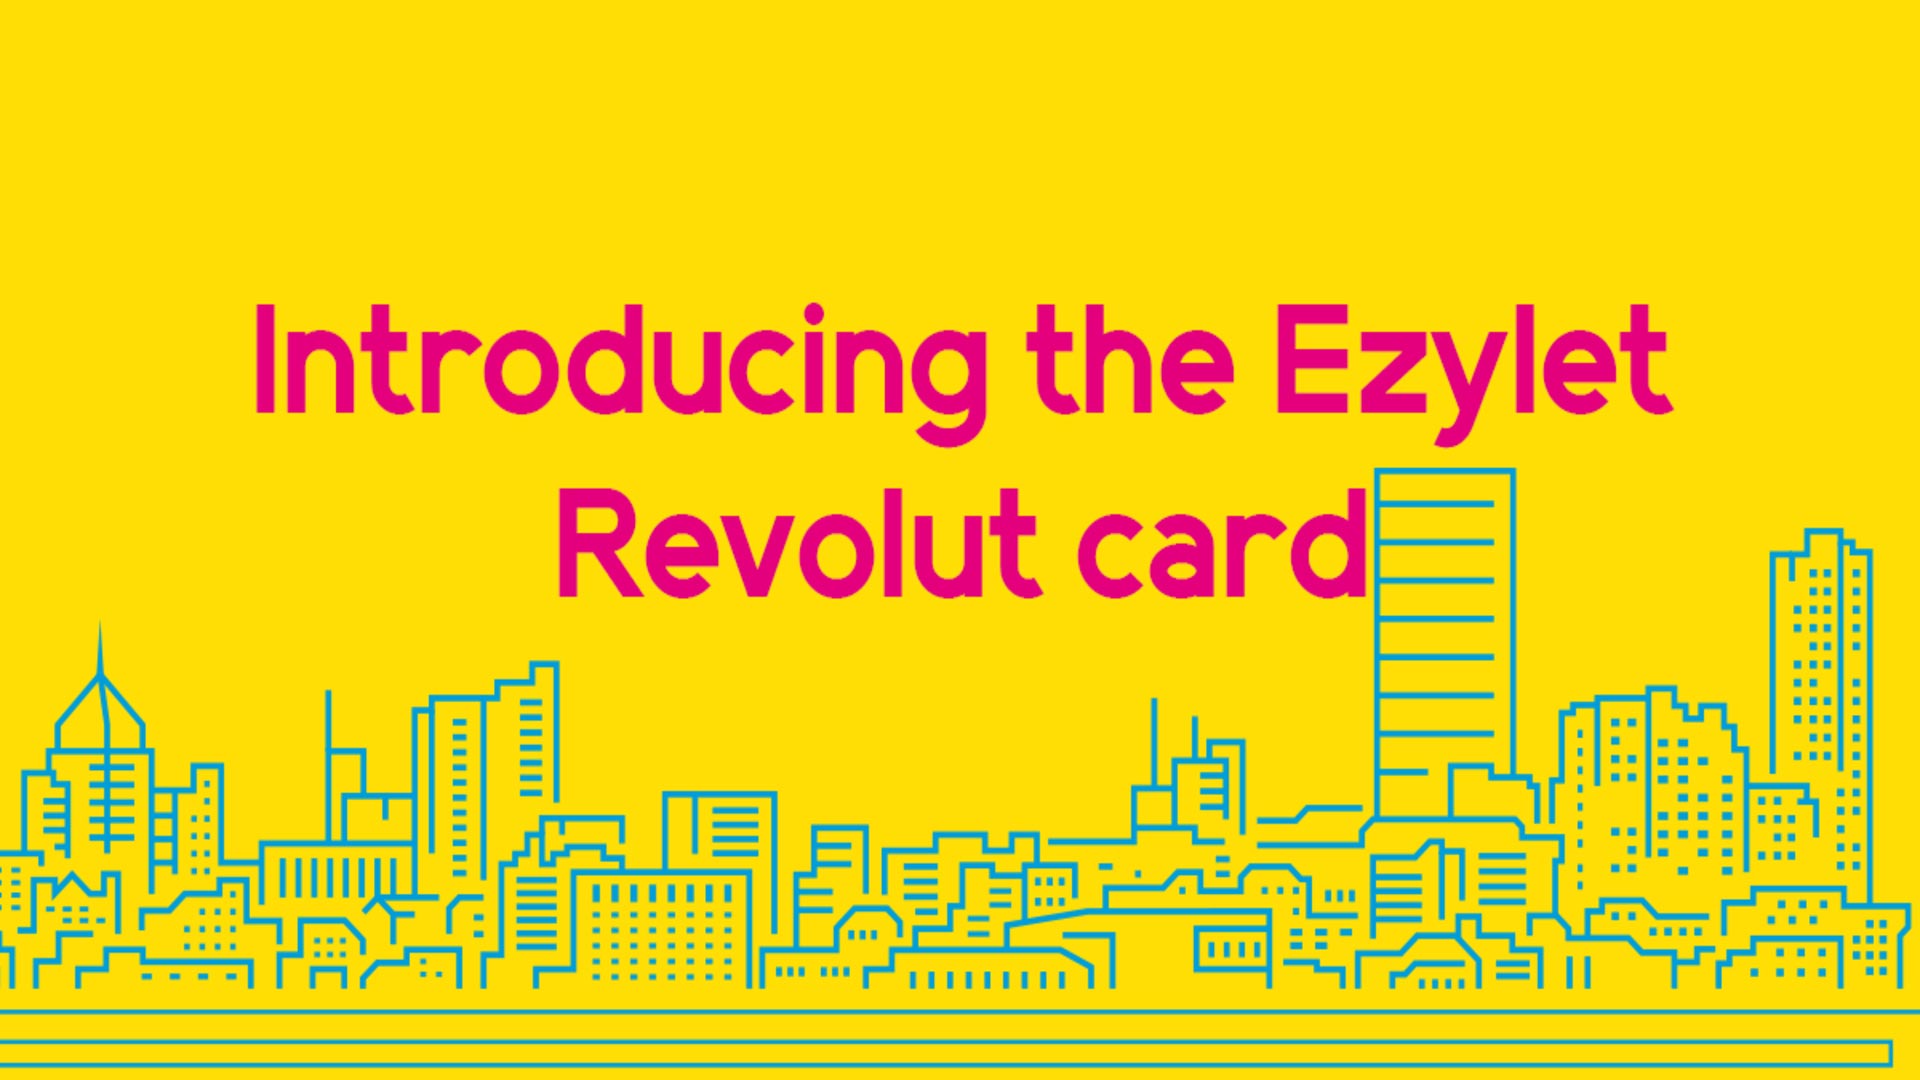 Introducing the Ezylet Revolut card